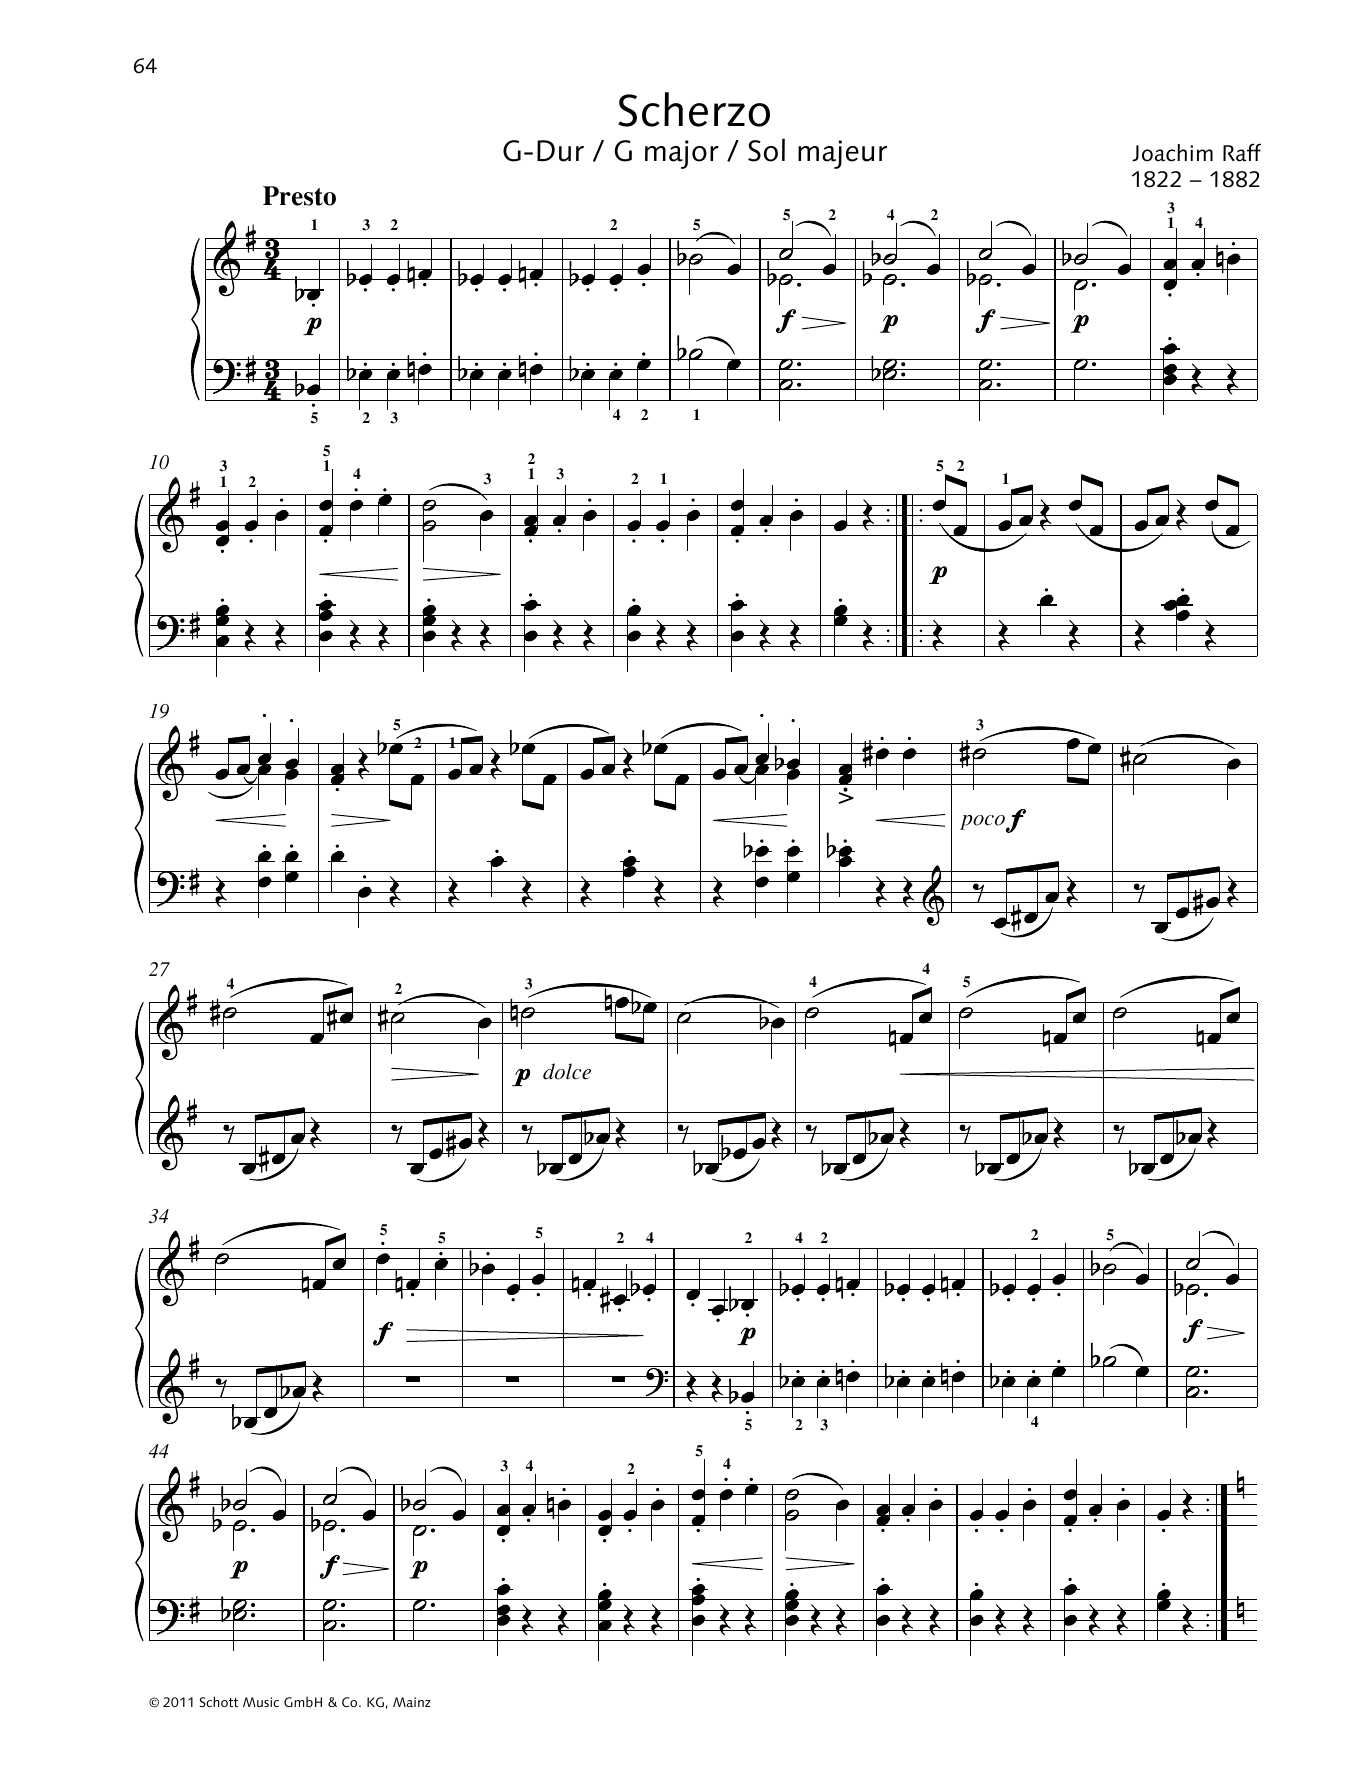 Download Monika Twelsiek Scherzo G major Sheet Music and learn how to play Piano Solo PDF digital score in minutes